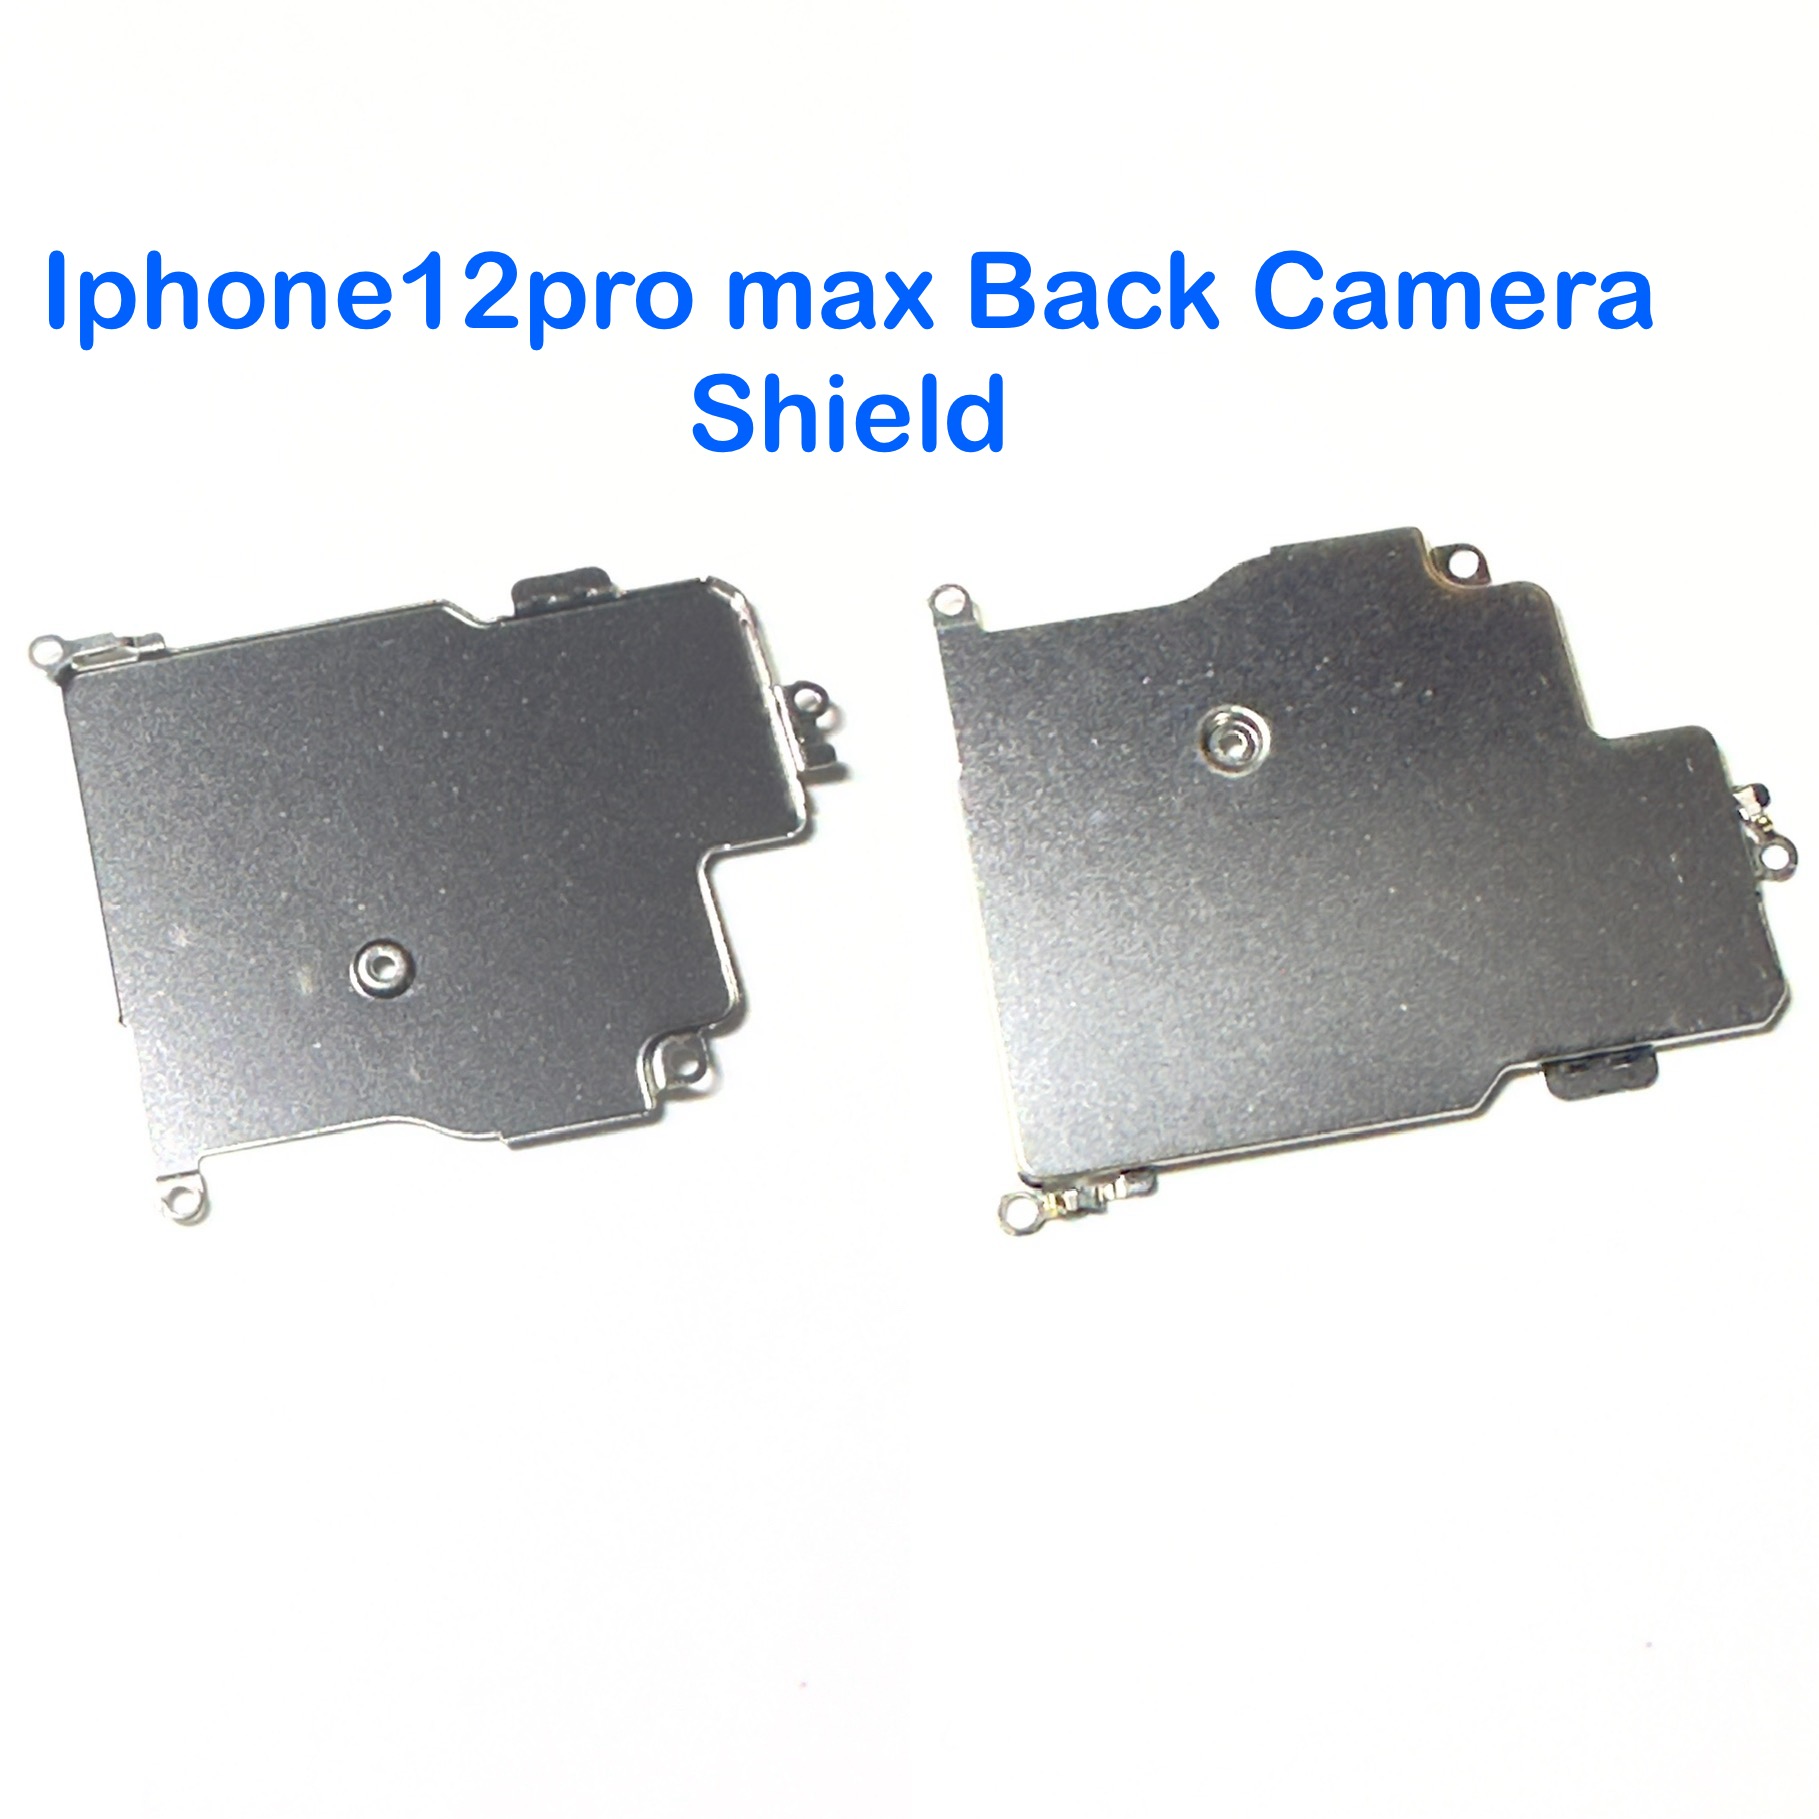 iphone12pro max back camera shield